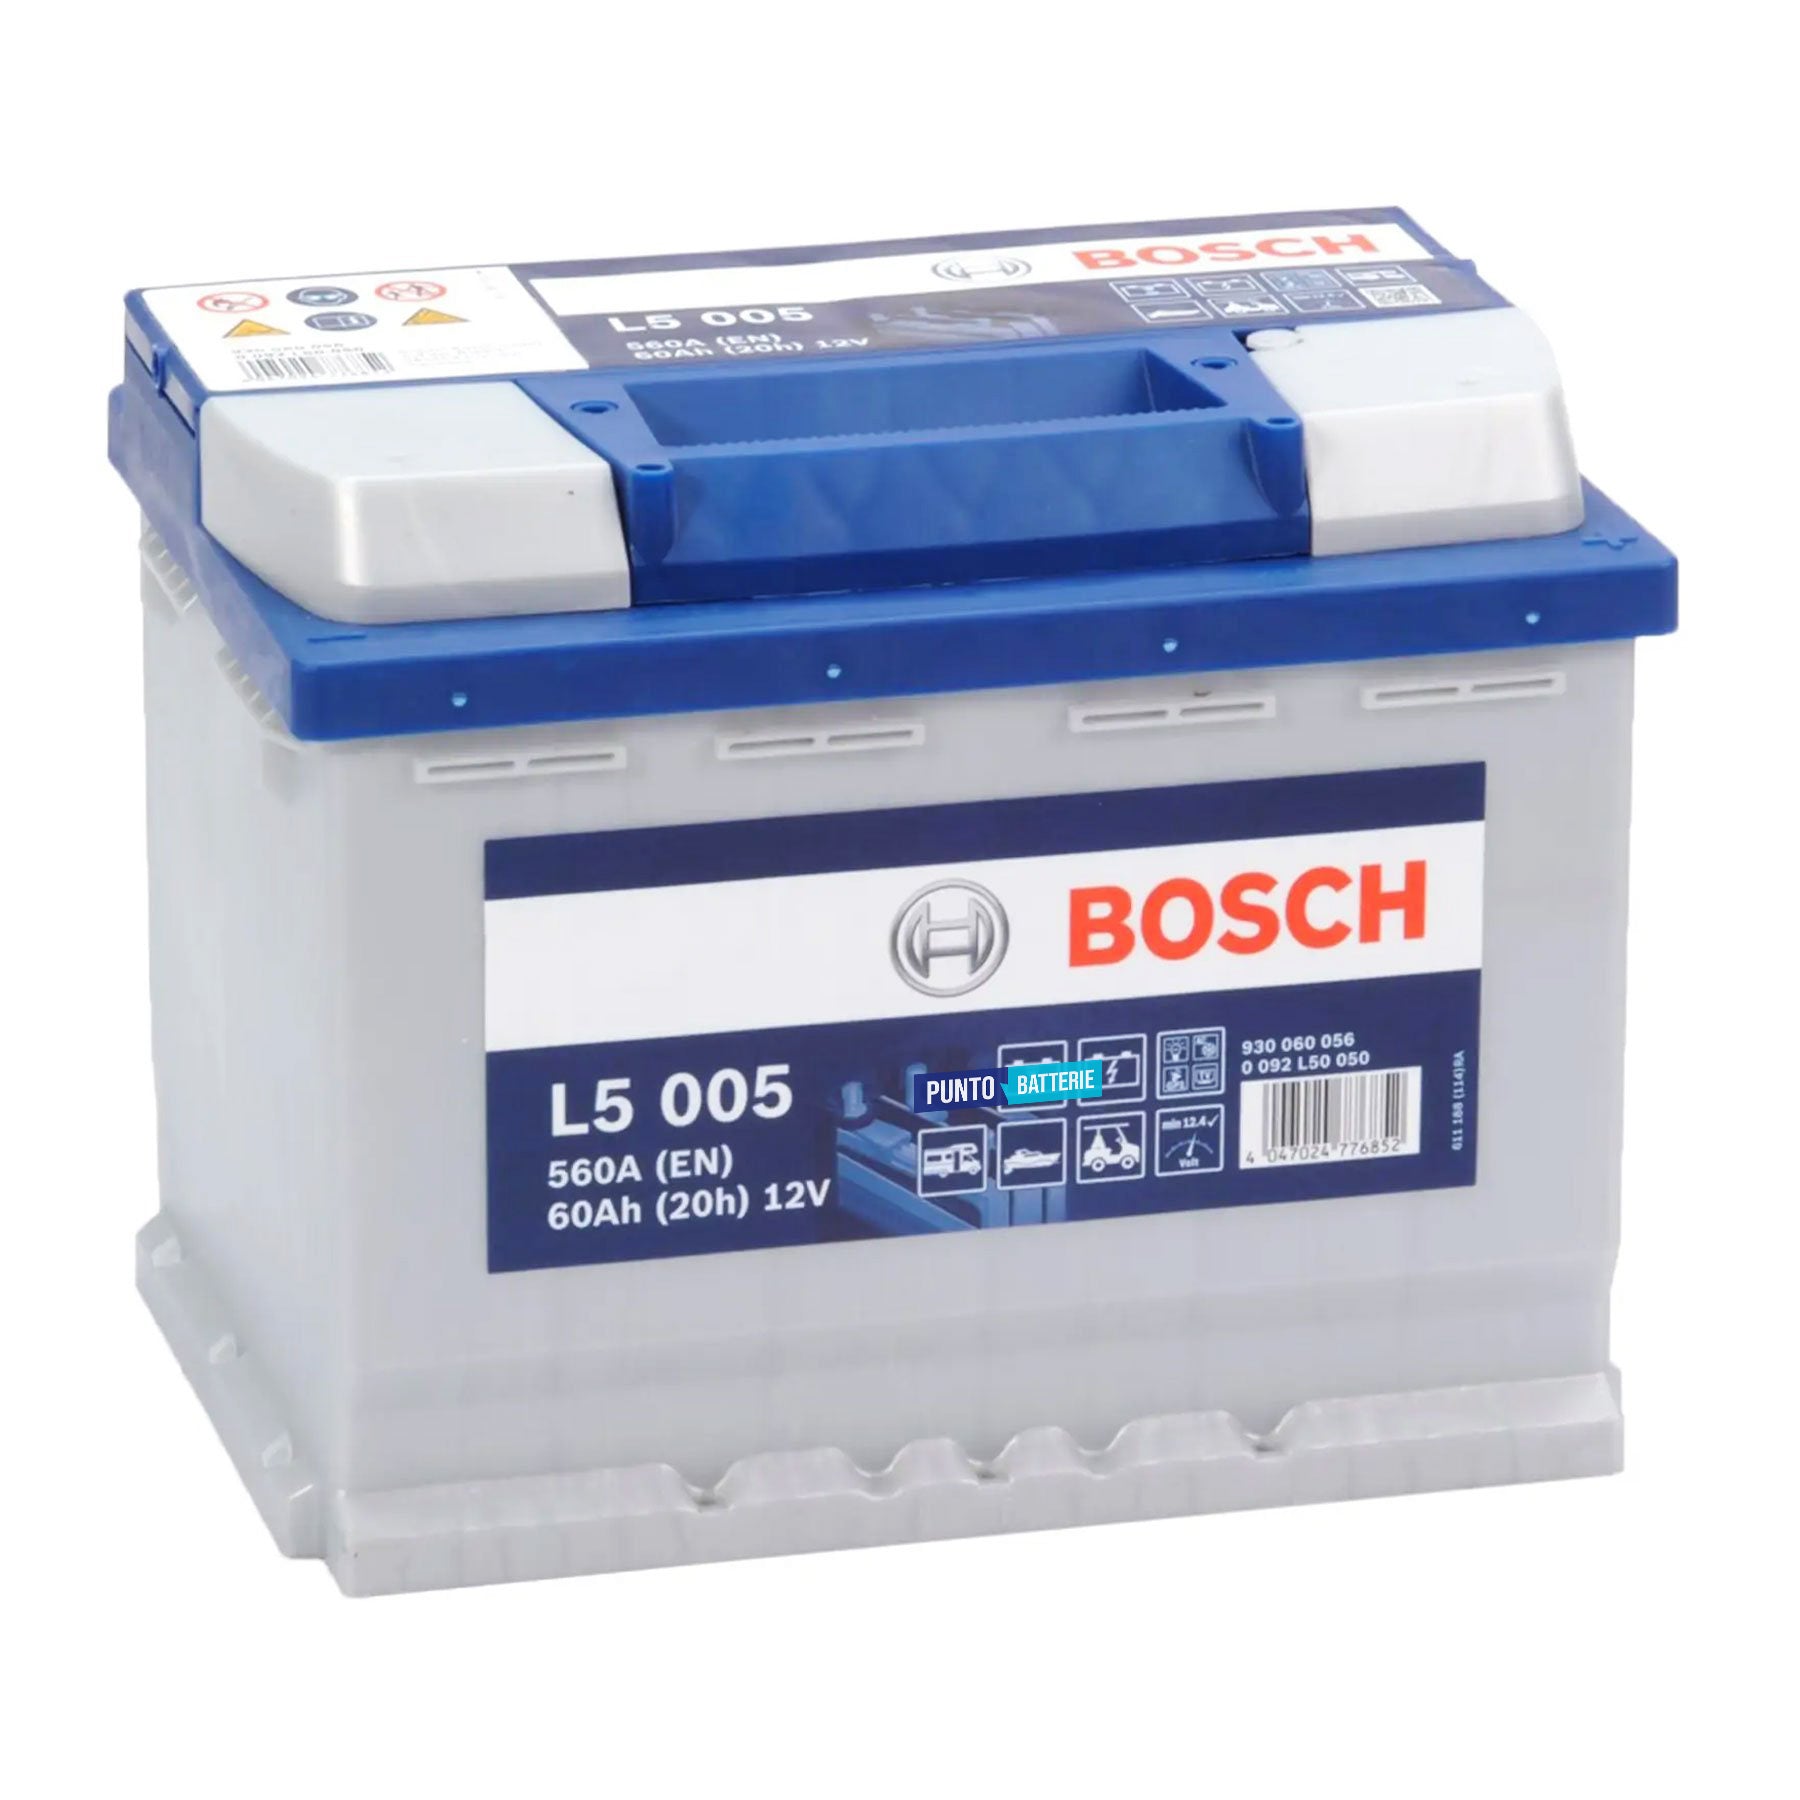 Batteria originale Bosch L5 L5 005, dimensioni 242 x 175 x 190, 12 volt, 60 amperora. Batteria per servizi di camper, barca e applicazioni a scarica lenta.